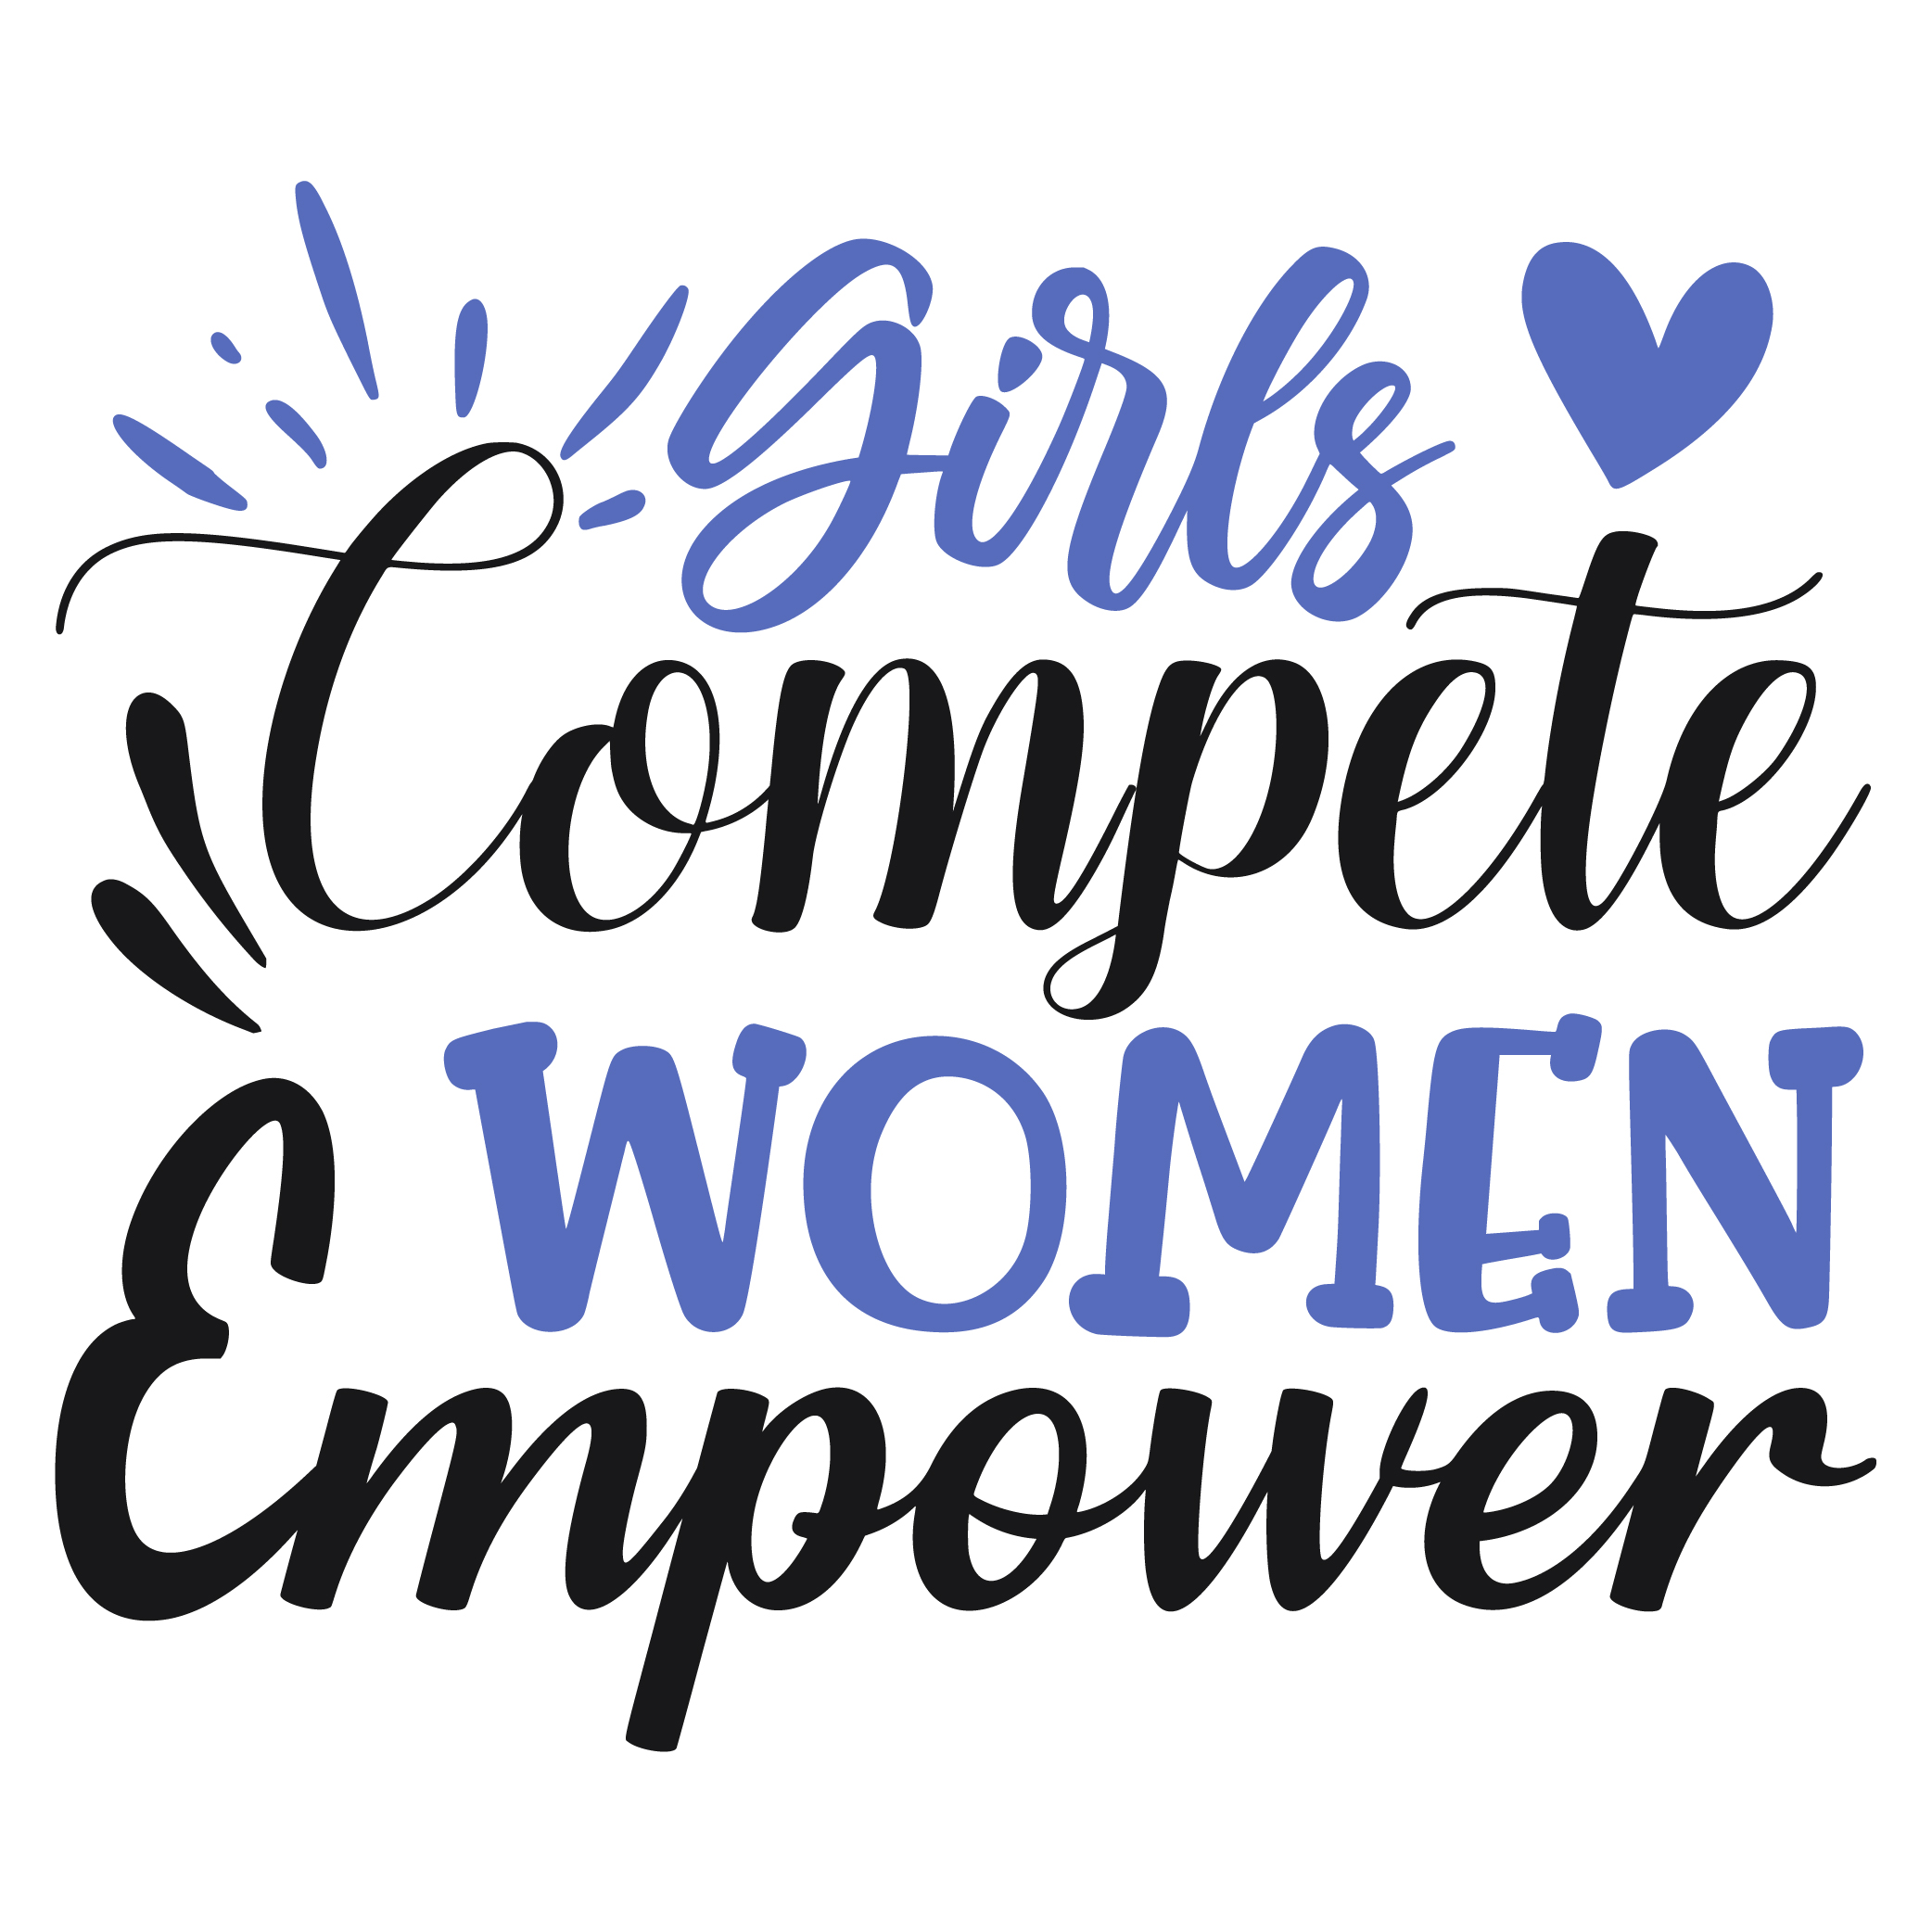 girls compete women empower woman SVG Boss Lady  Black Lives Matter  Lady Woman Diva Tshirt Cut File Cricut Silhouette Women Empowerment svg Feminism svg Girl Power 